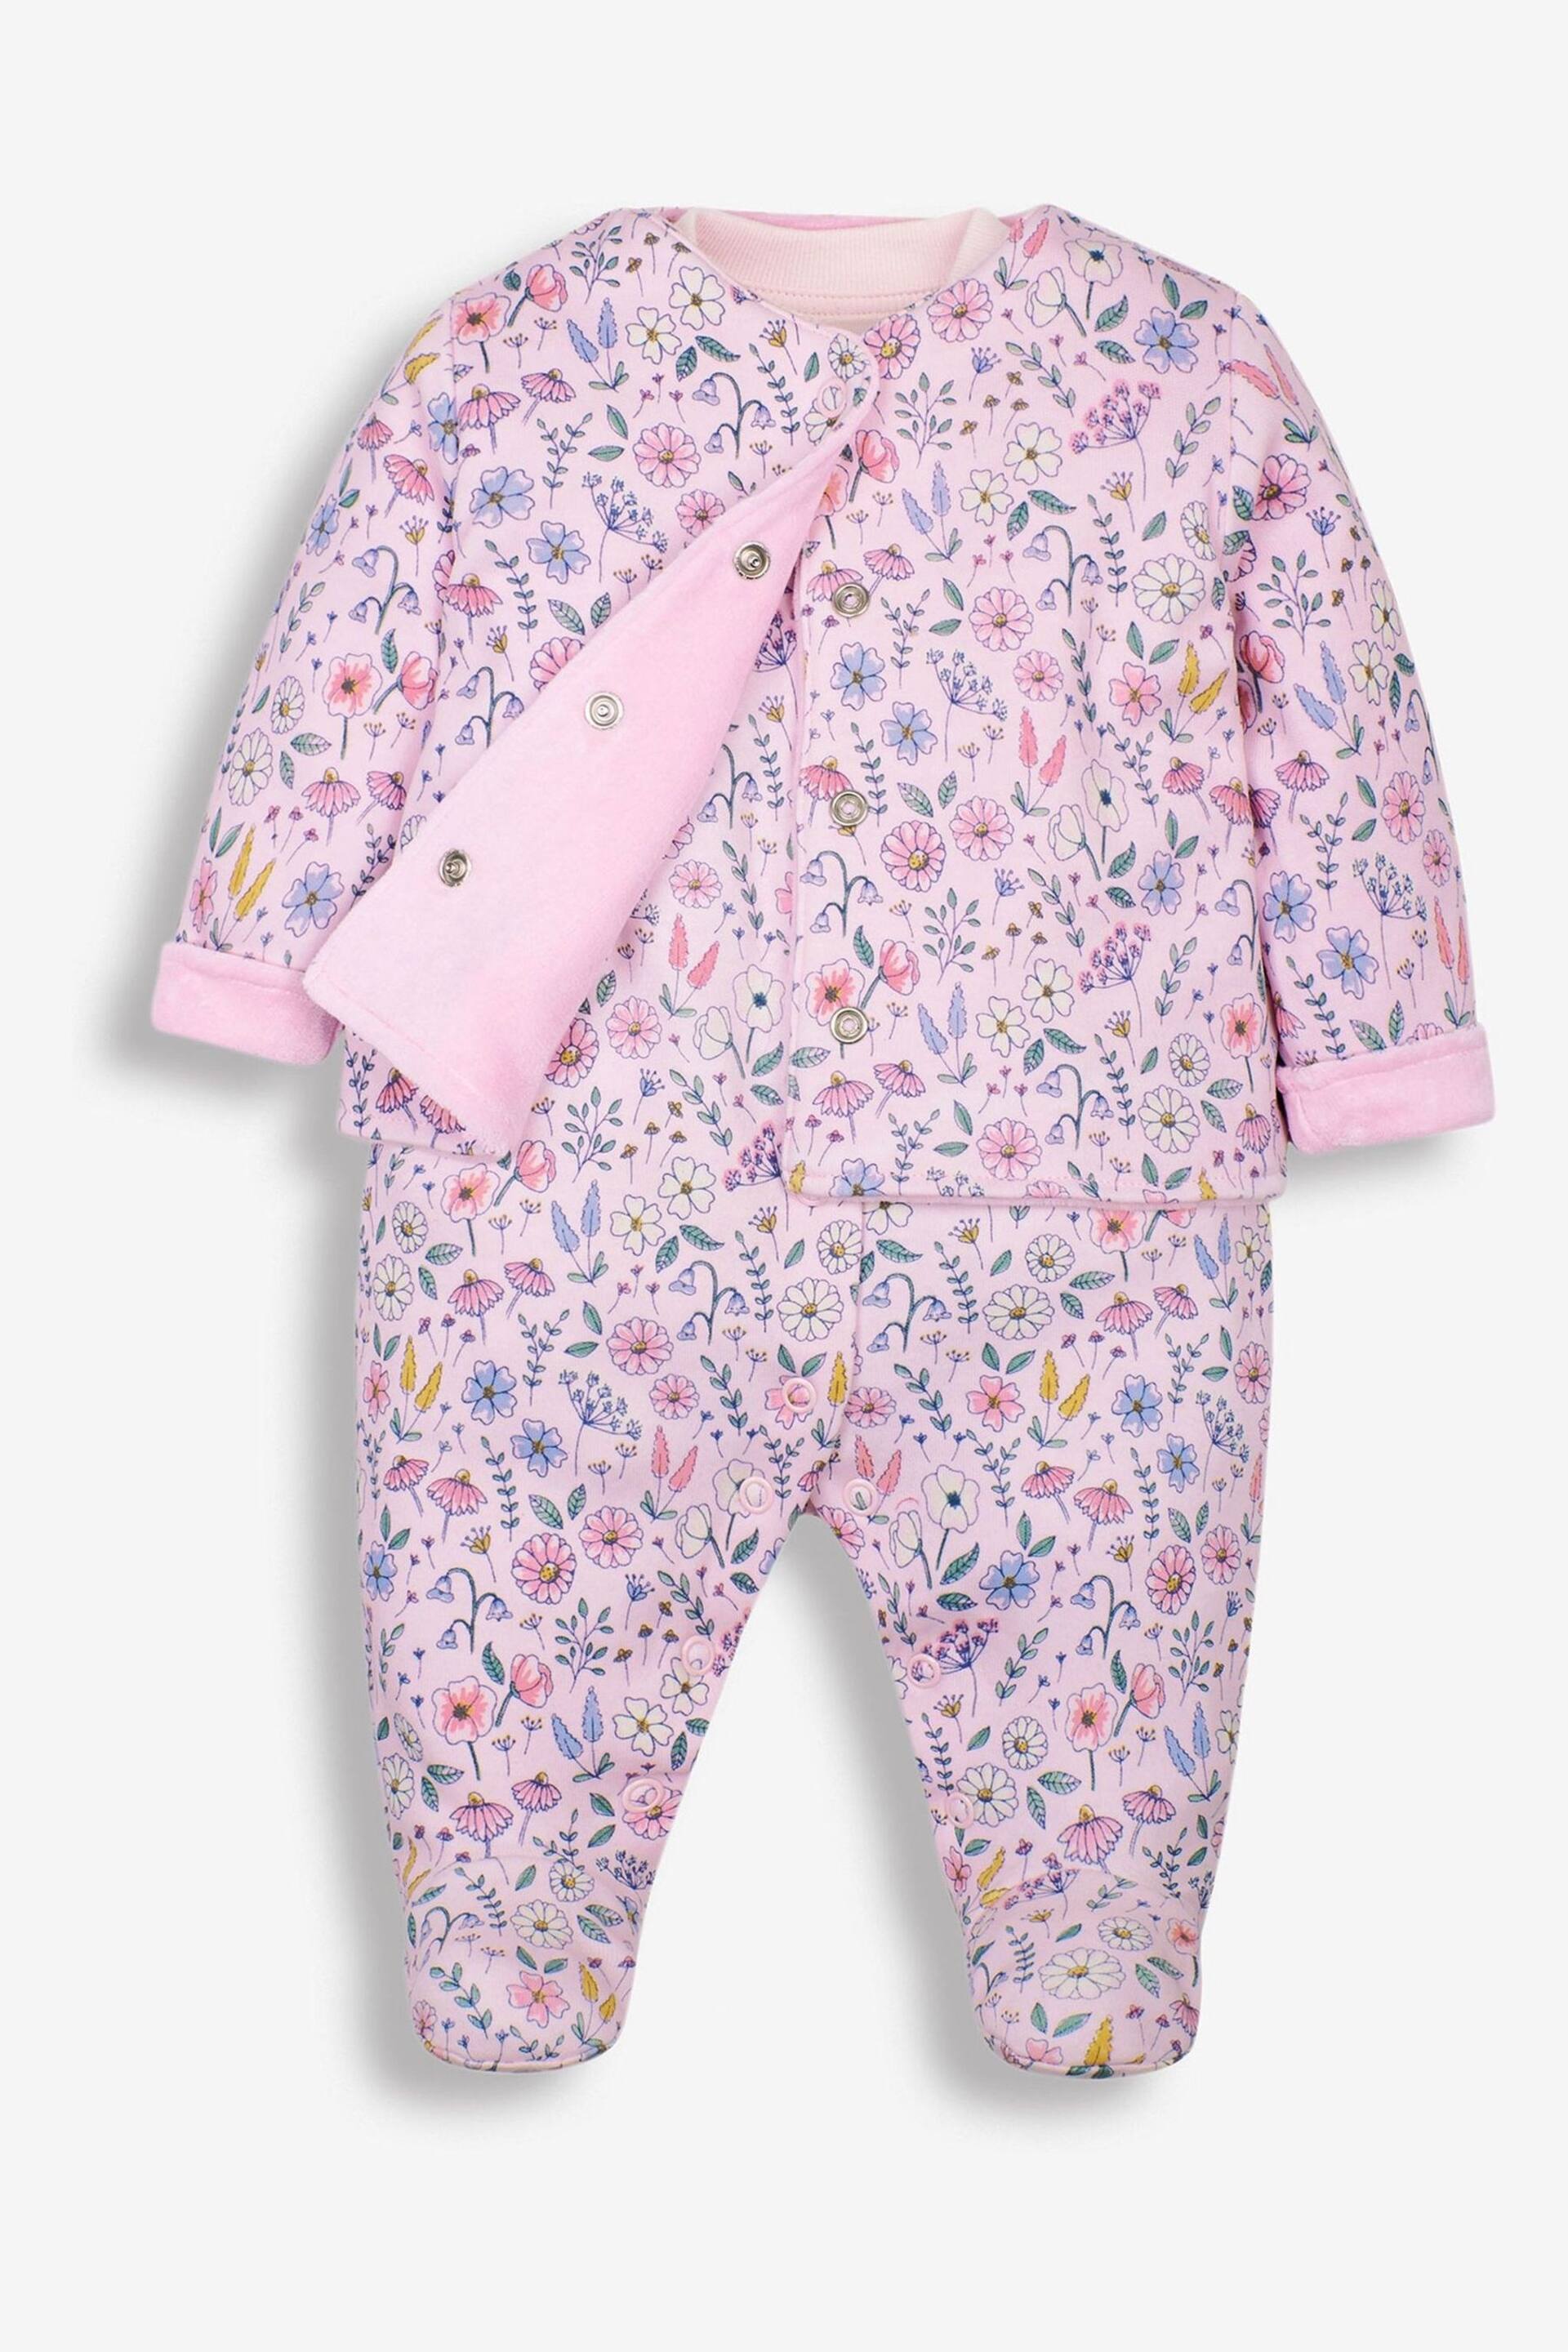 JoJo Maman Bébé Pink Floral 2-Piece Baby Sleepsuit & Velour Jacket Set - Image 4 of 9